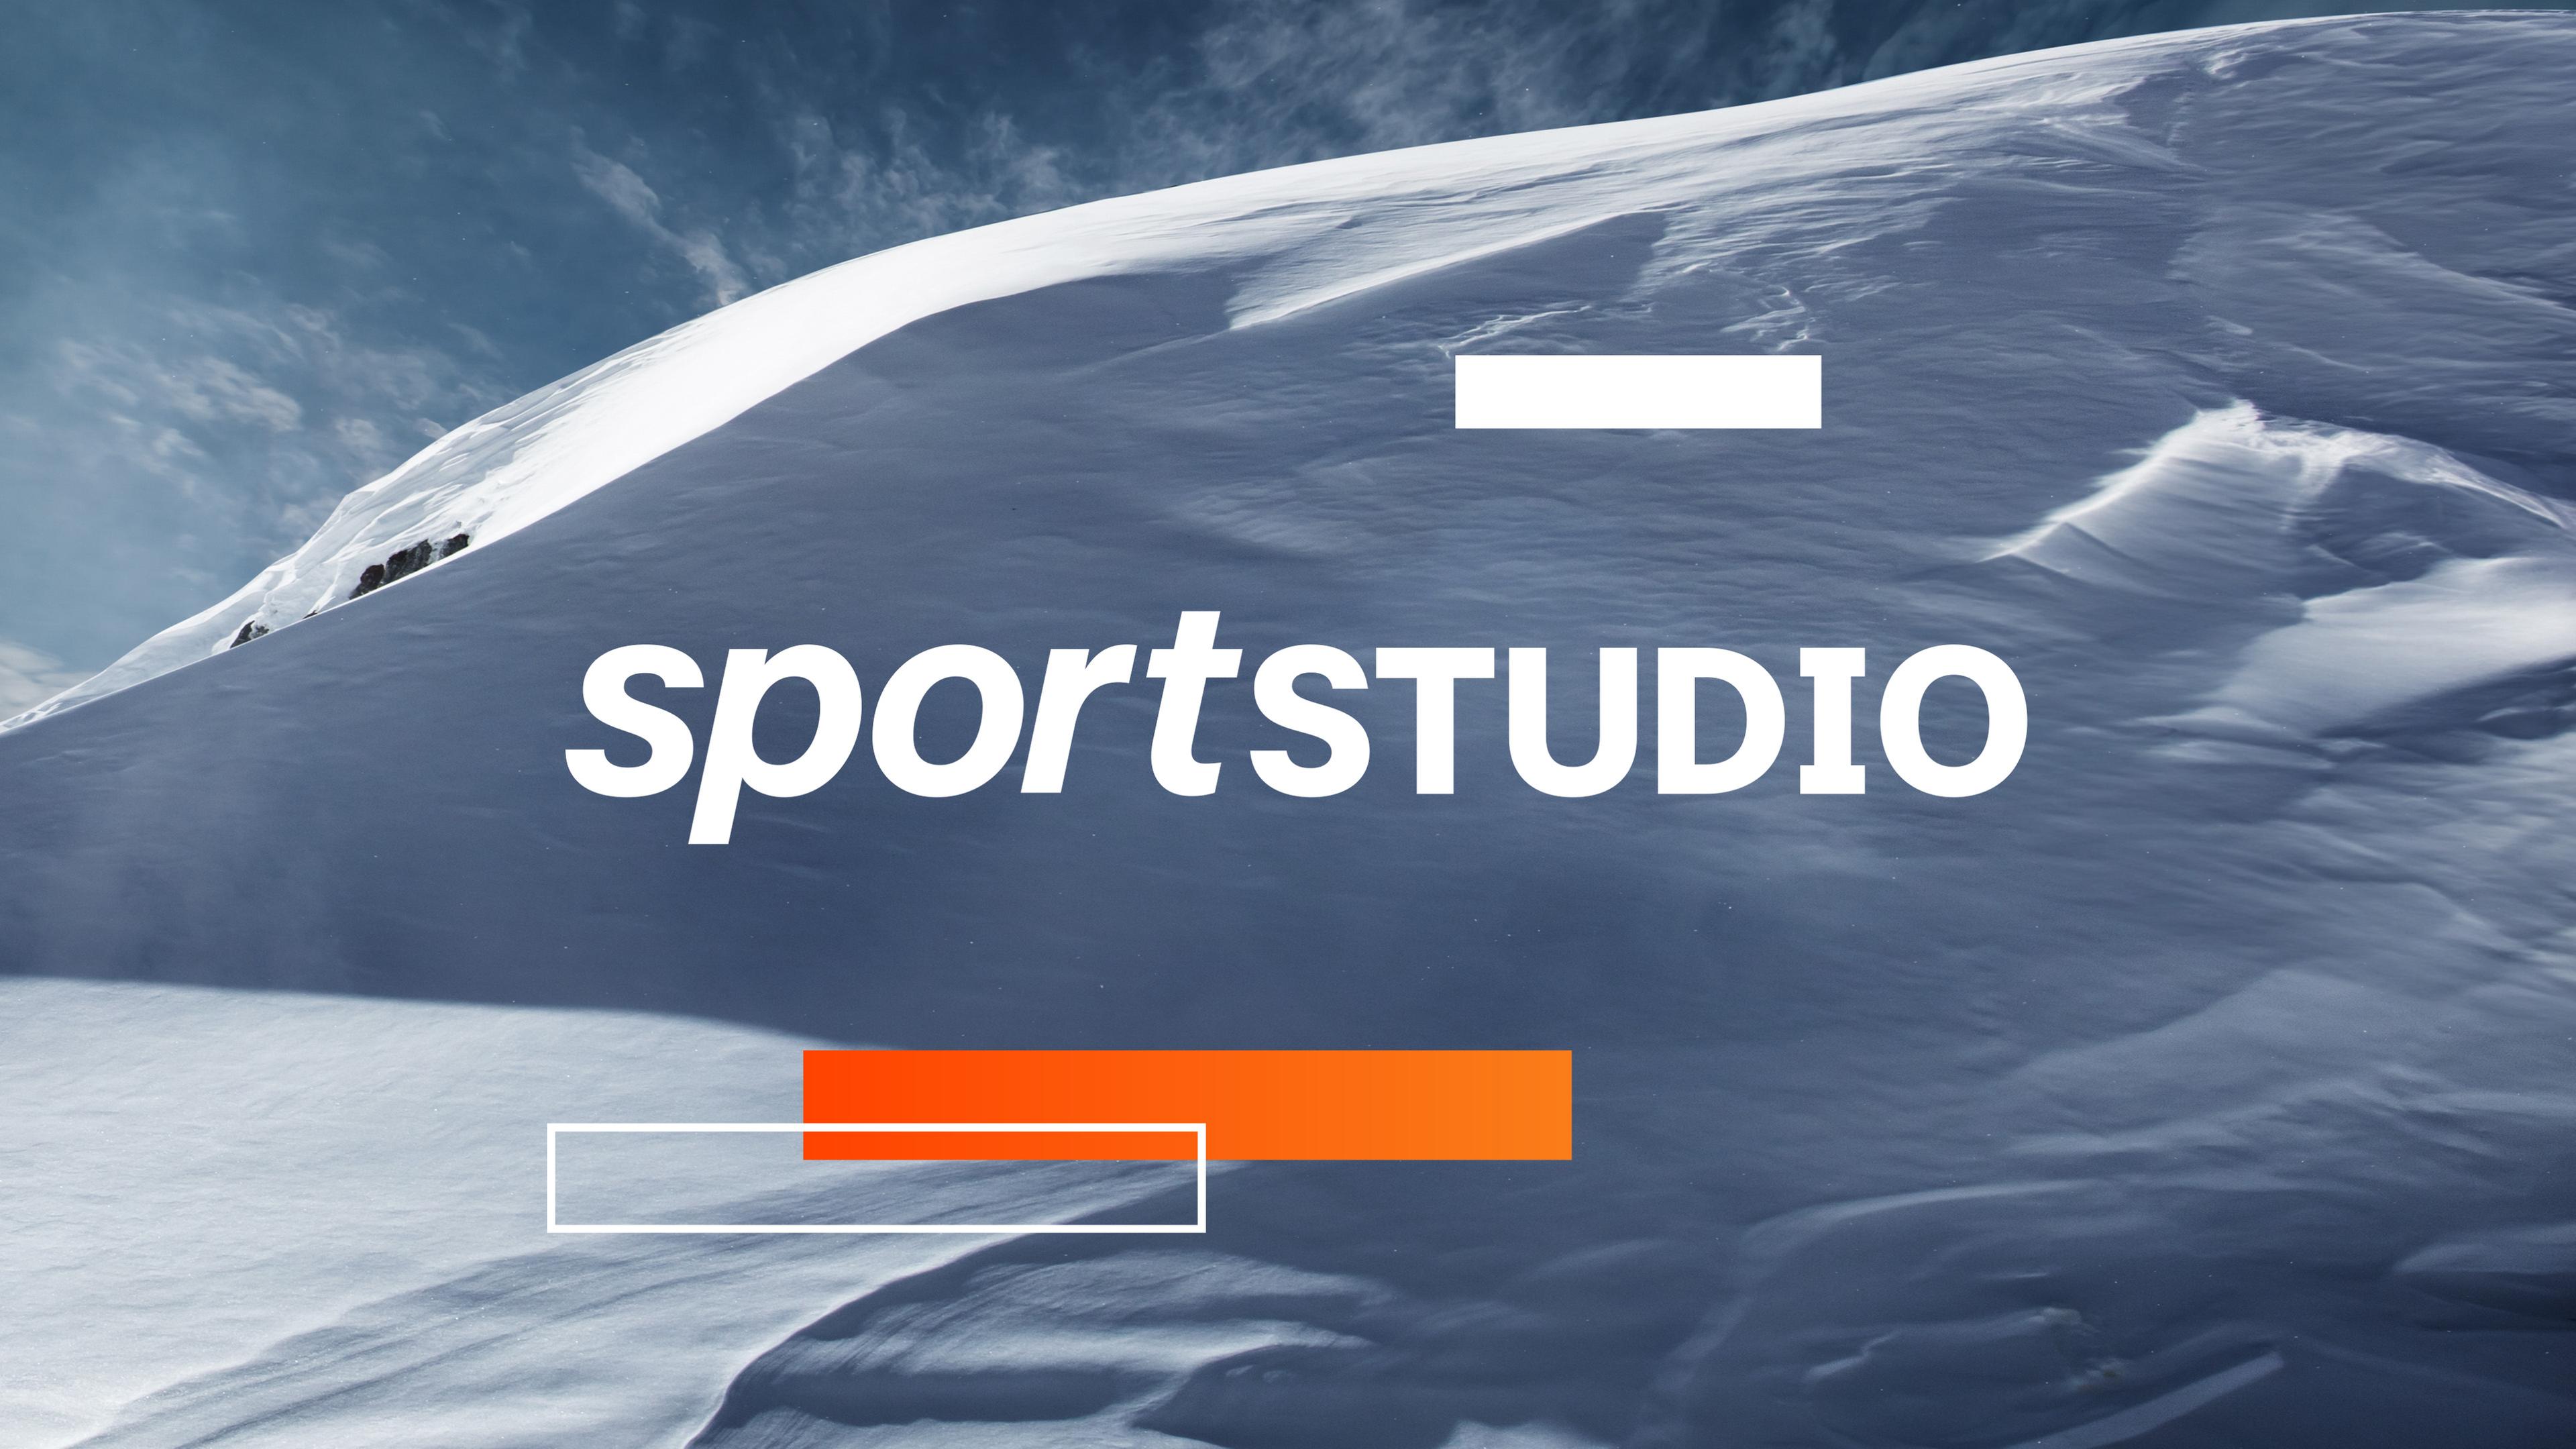 Sportstudio: Wintersport